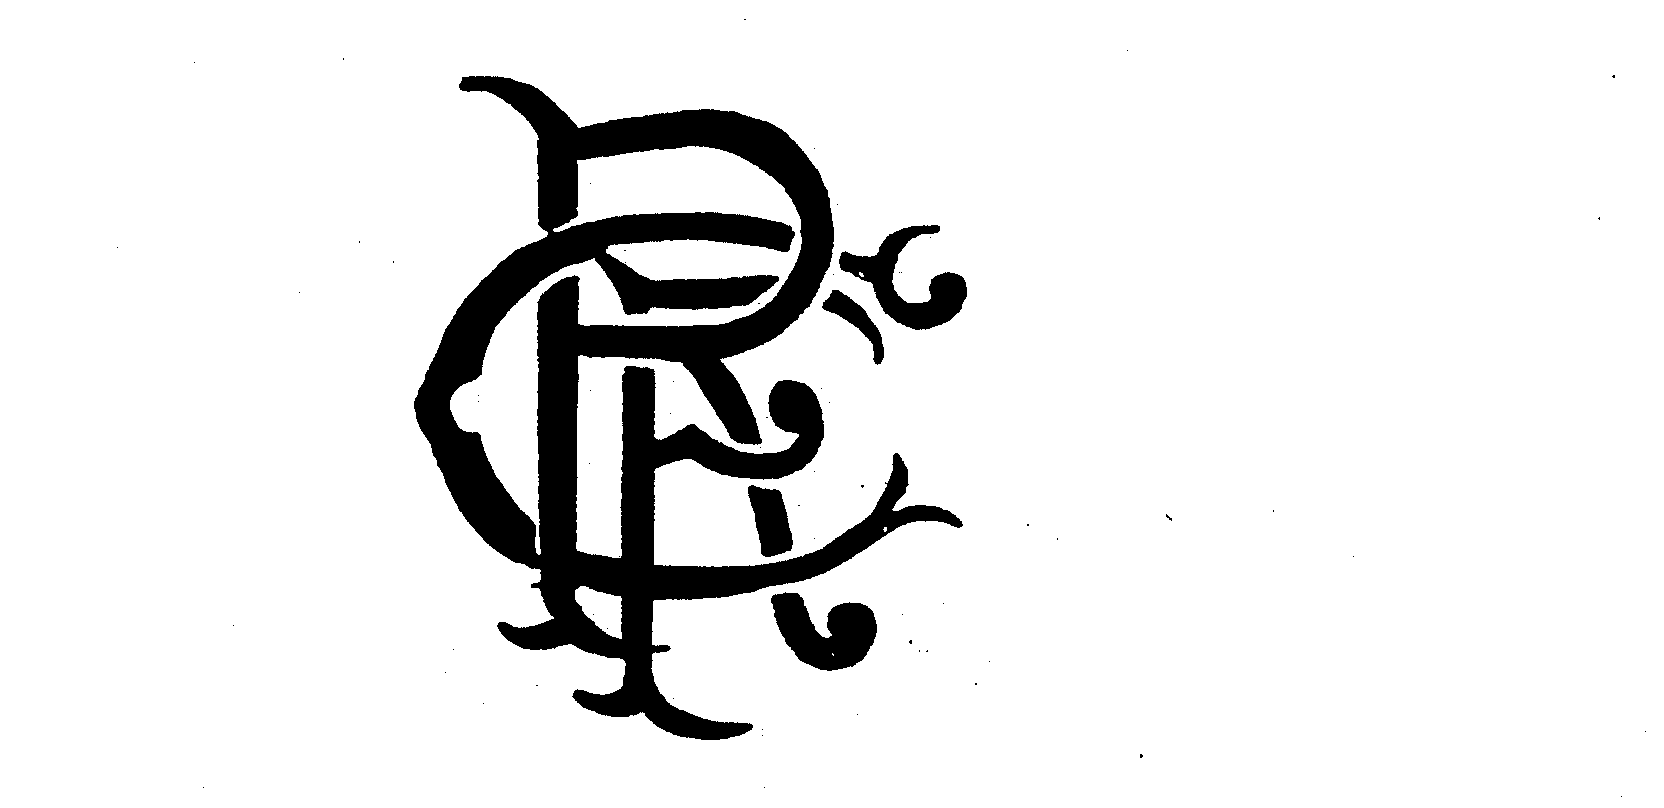 Trademark Logo RFC